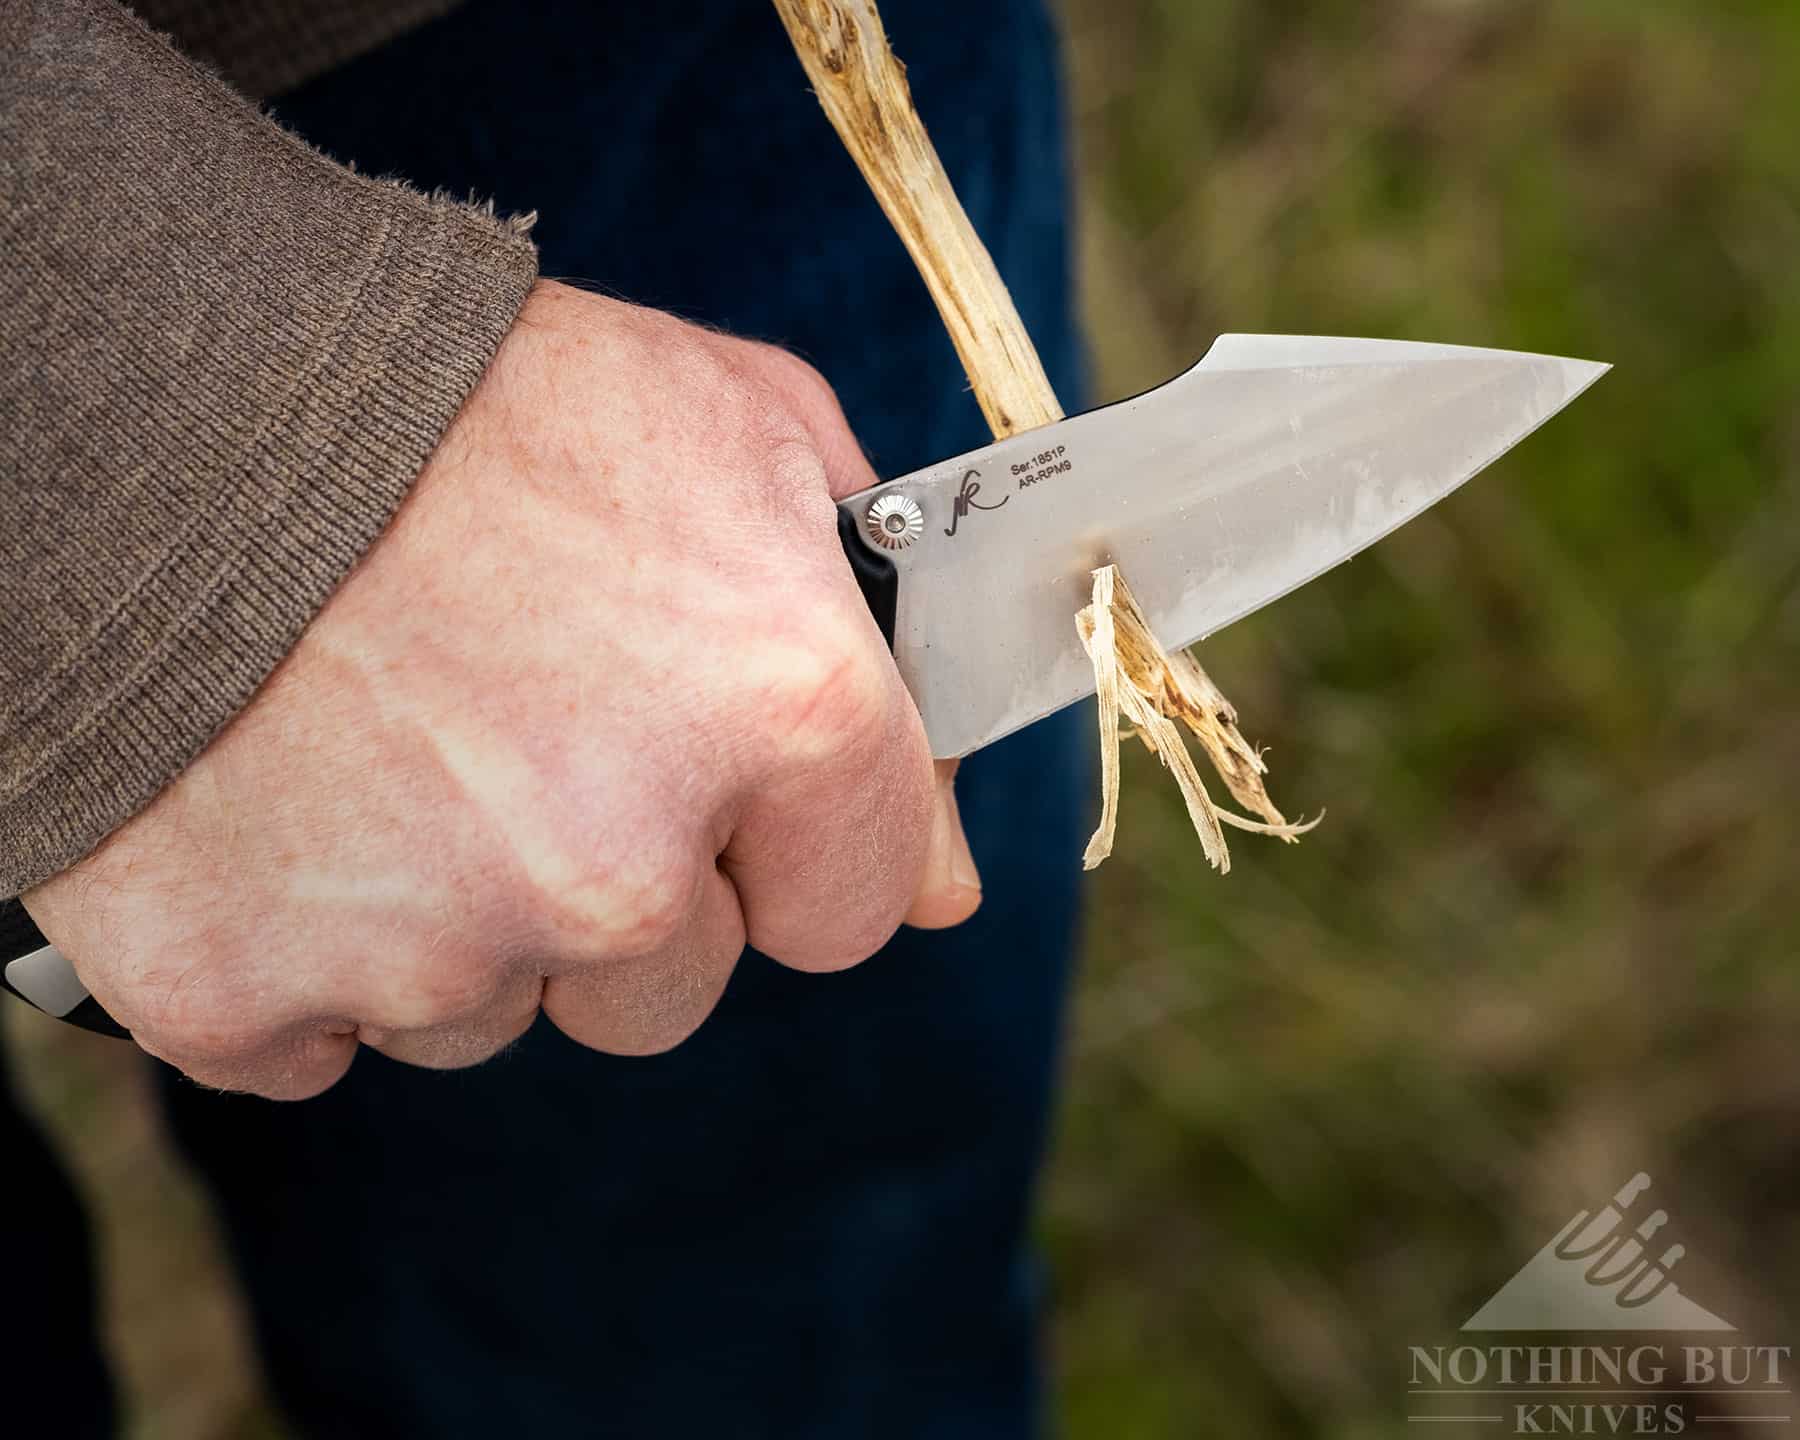 The Ahab makes a good camping knife. 